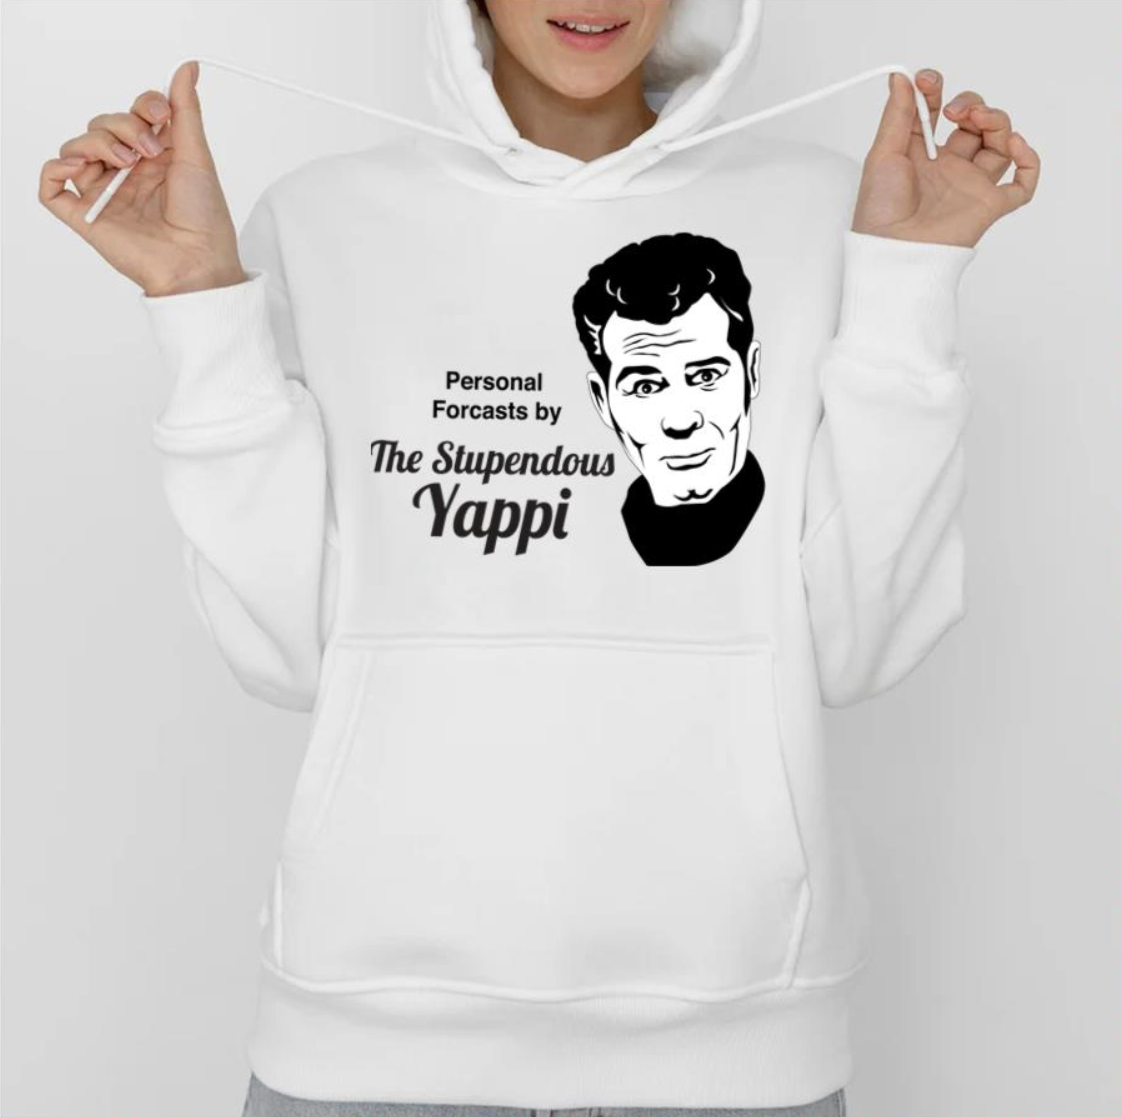 The Stupendous Yappi X Files Series Shirt